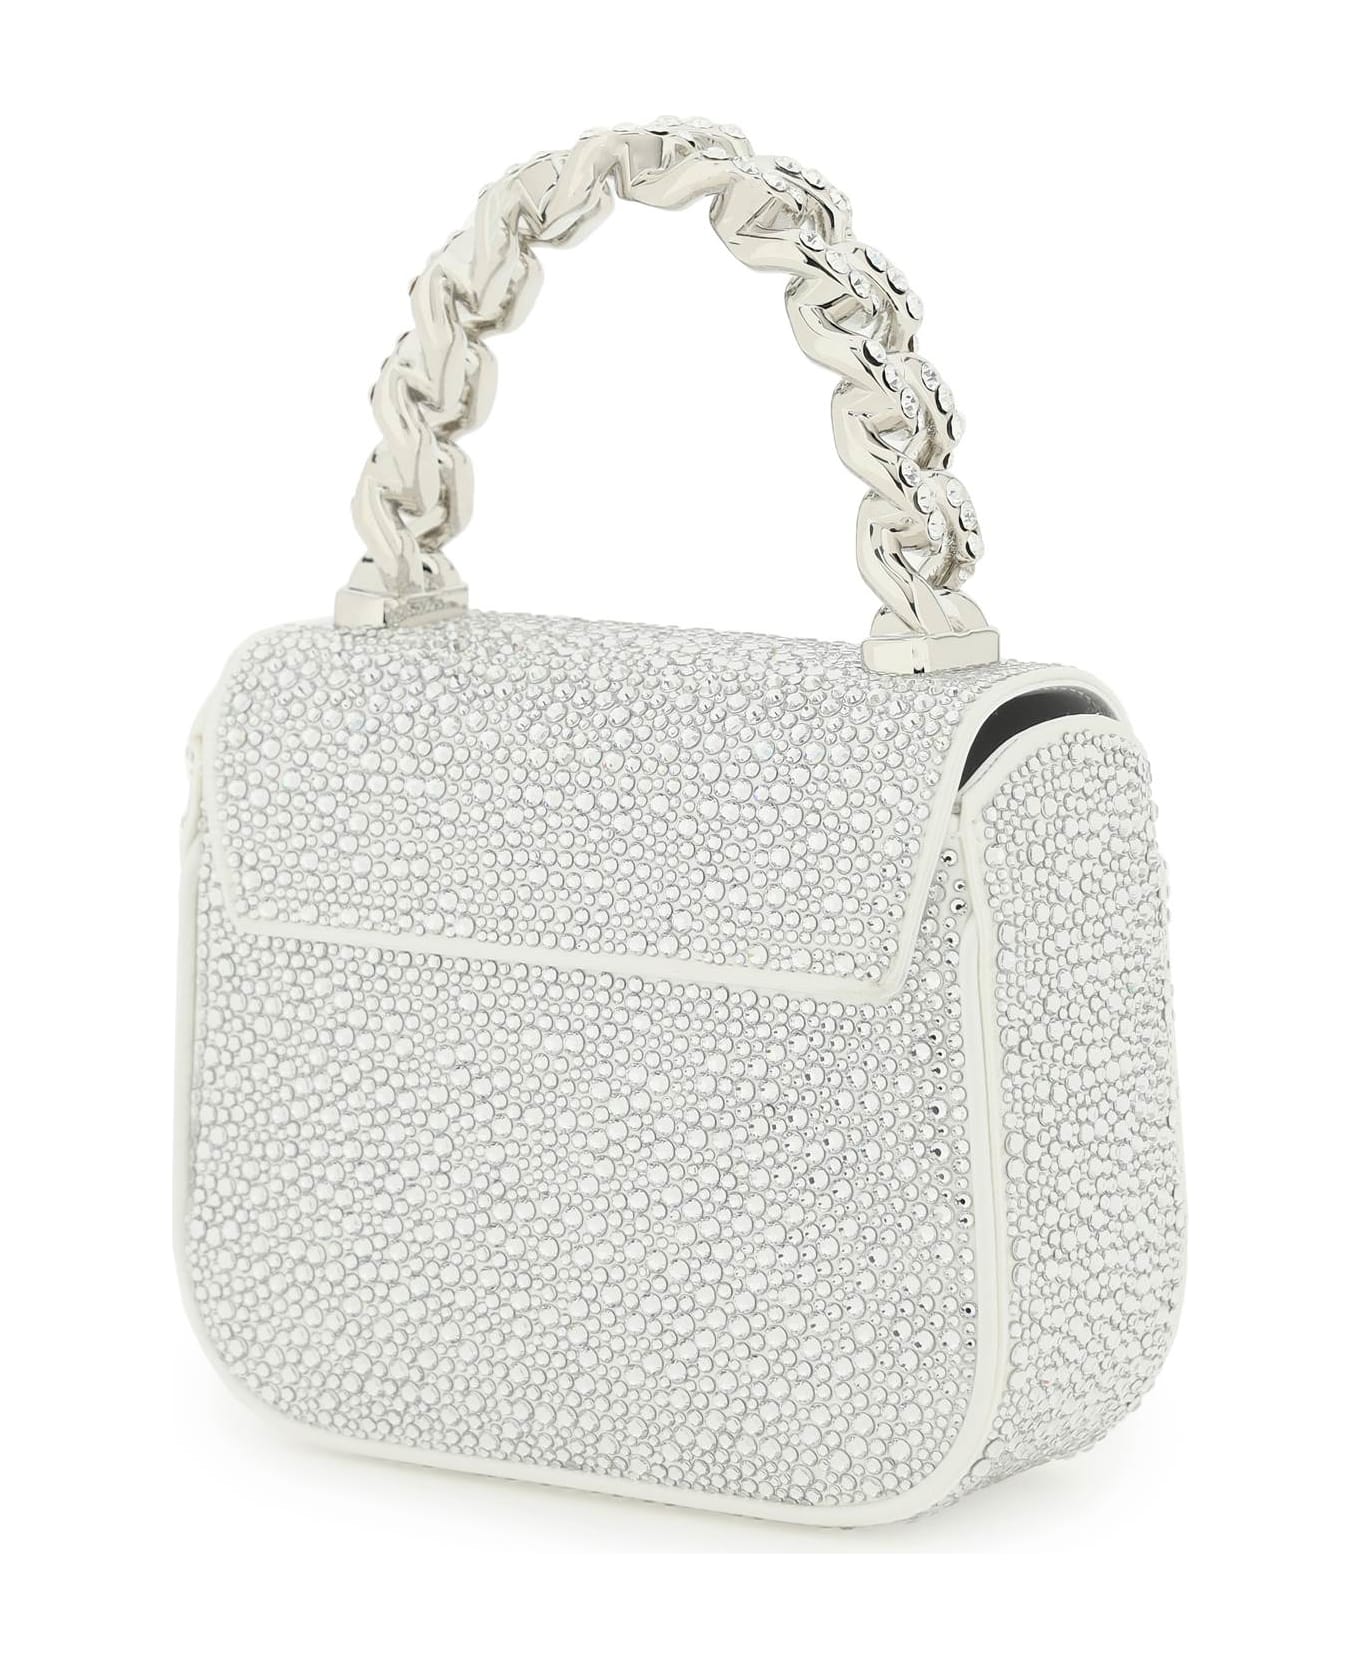 Versace La Medusa Handbag With Crystals - OPTICAL WHITE PALLADIUM (Silver)